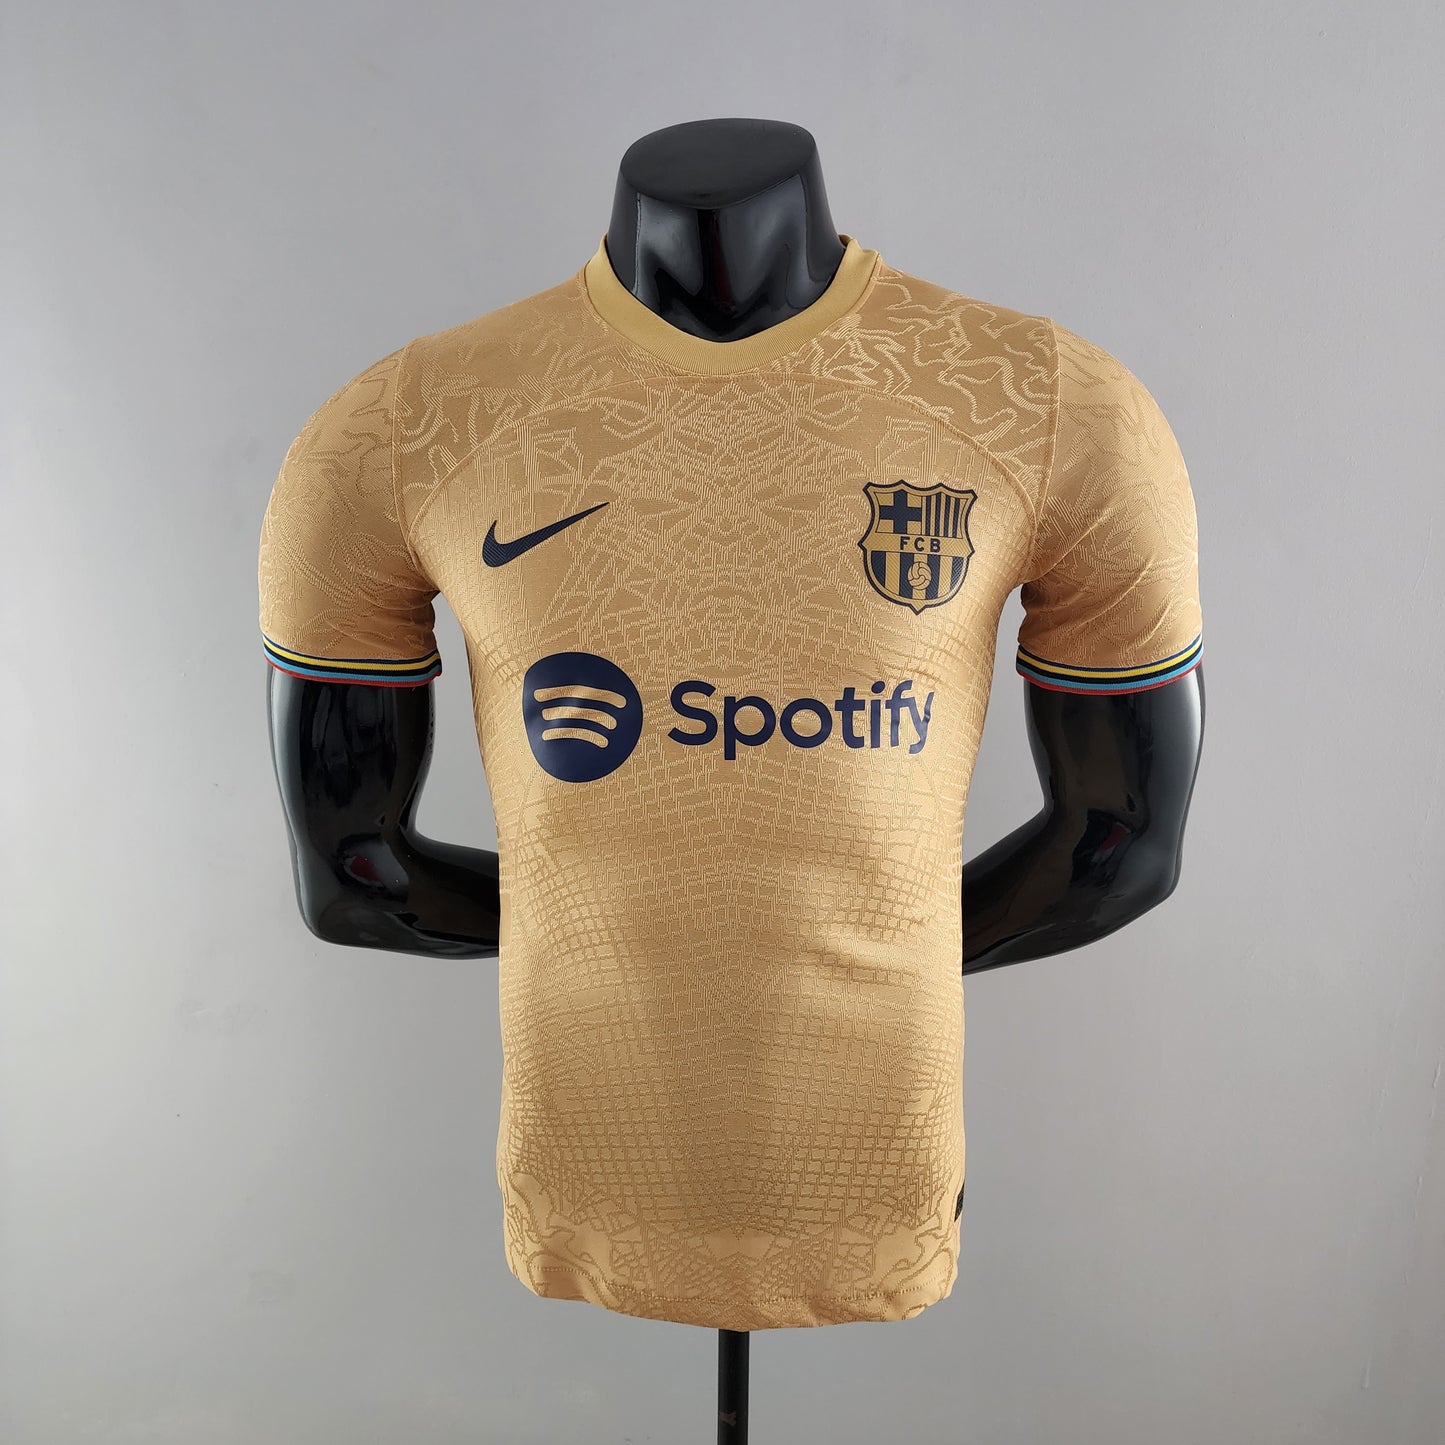 Barcelona 22/23 away kit player Version